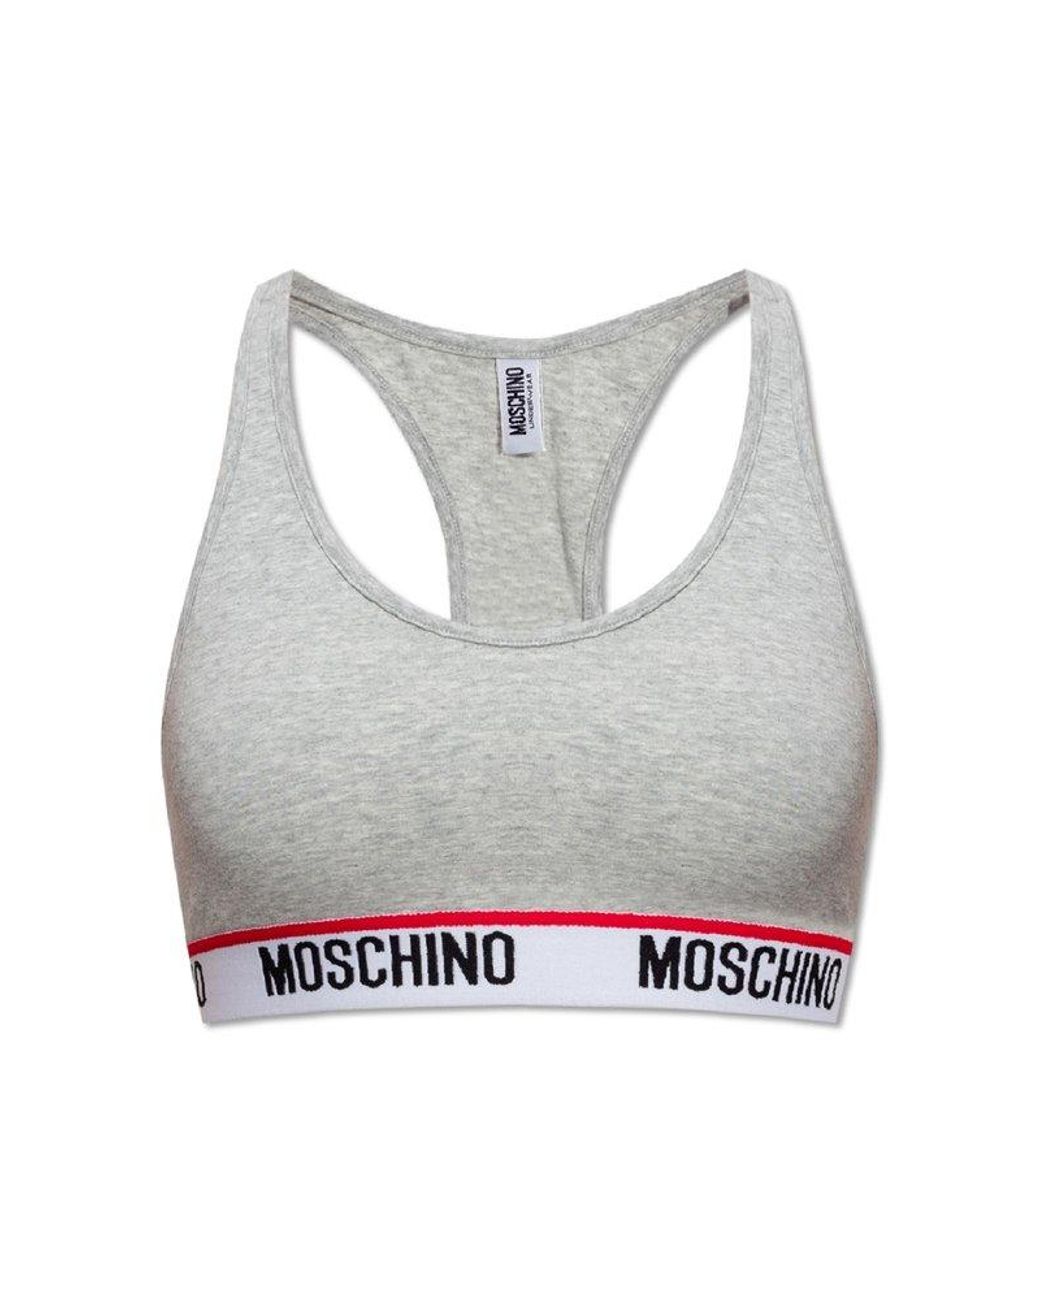 Moschino Logo Underband Sports Bra in Gray